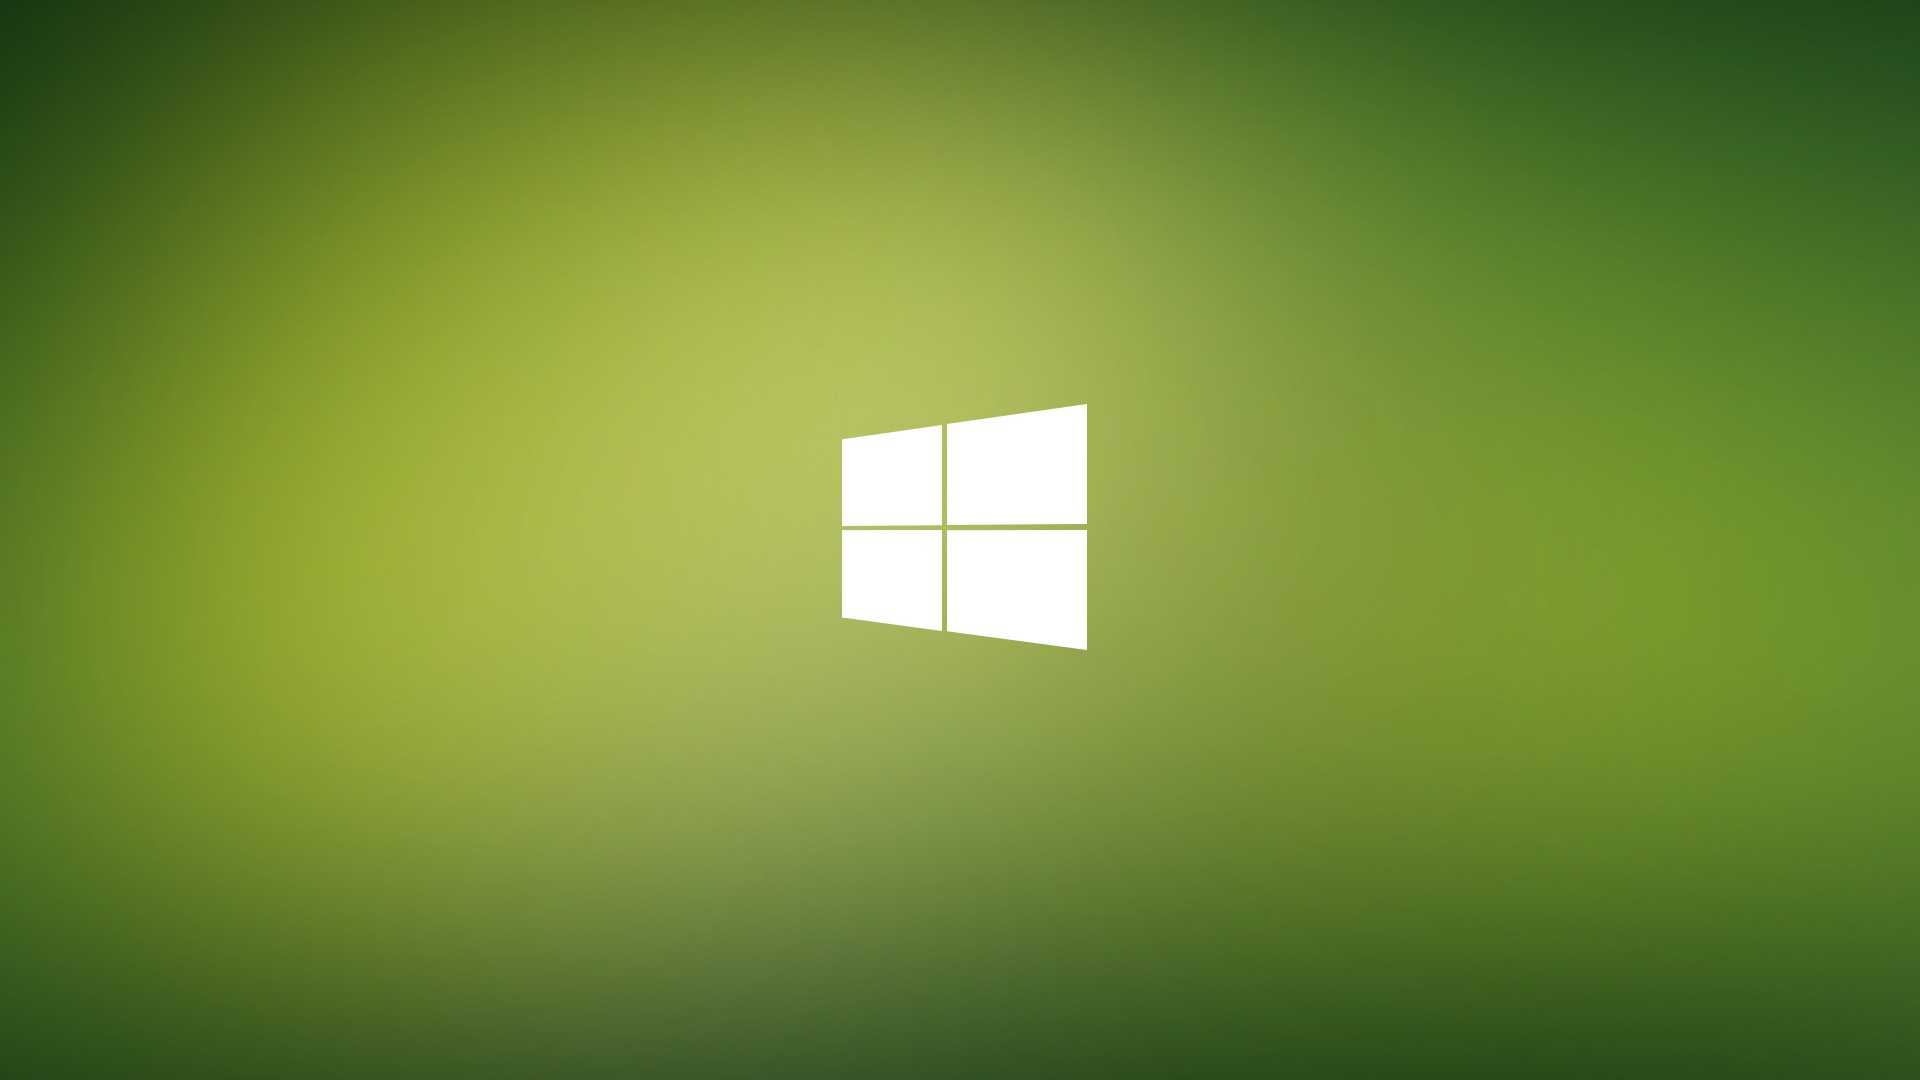 Green Screen Software Free Download Windows 10